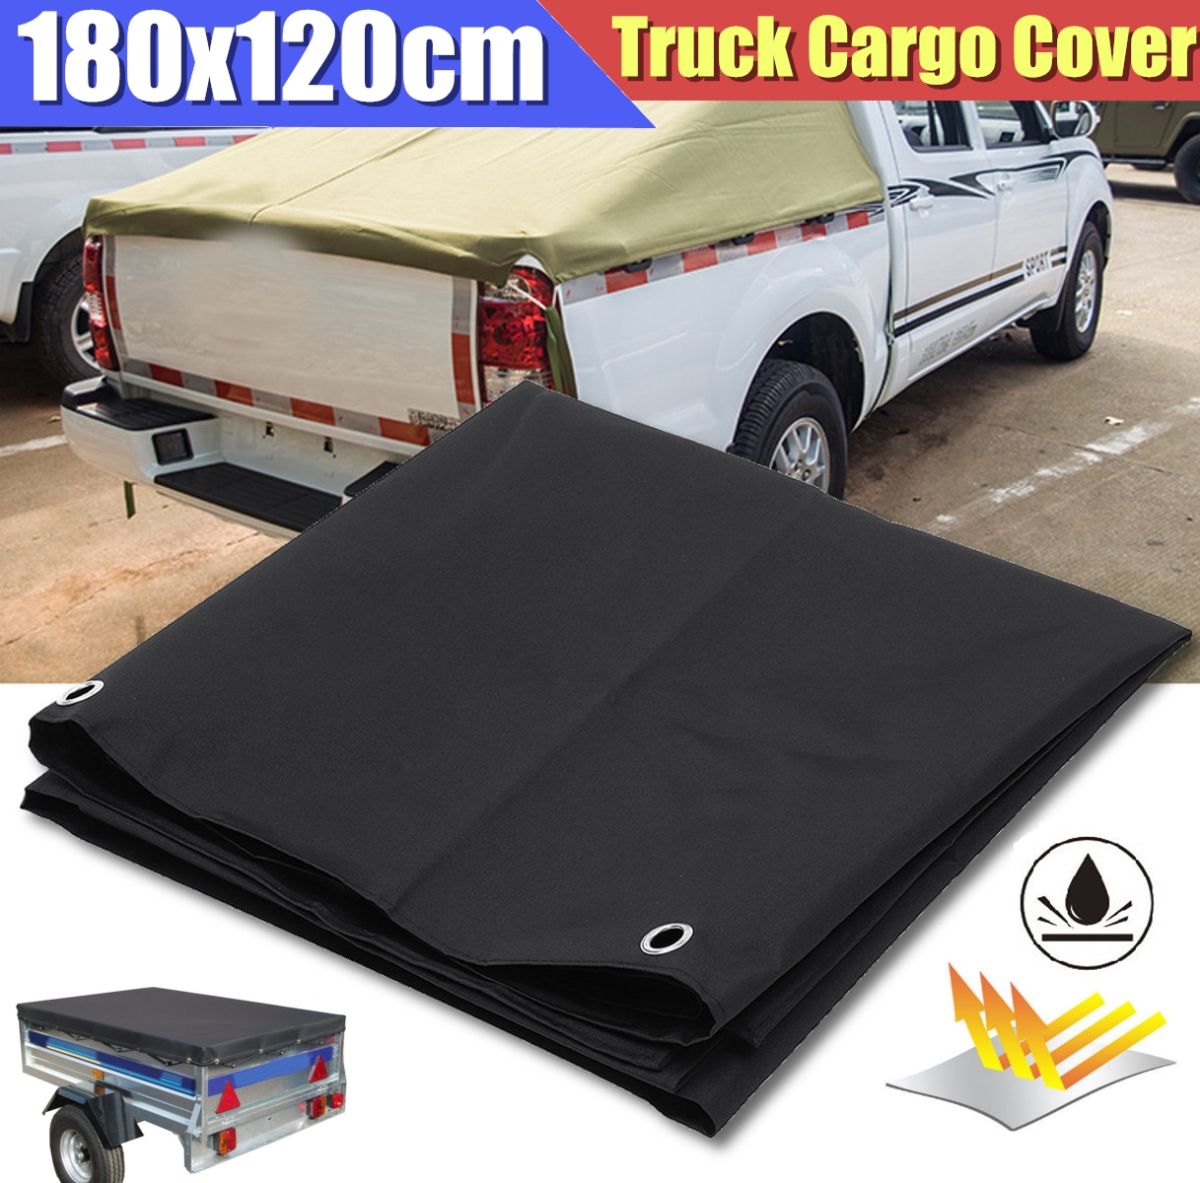 180x120cm-Black-Truck-Cargo-Cover-Trailer-Car-Rear-Shade-Heavy-Duty-Protect-Waterproof-1409841